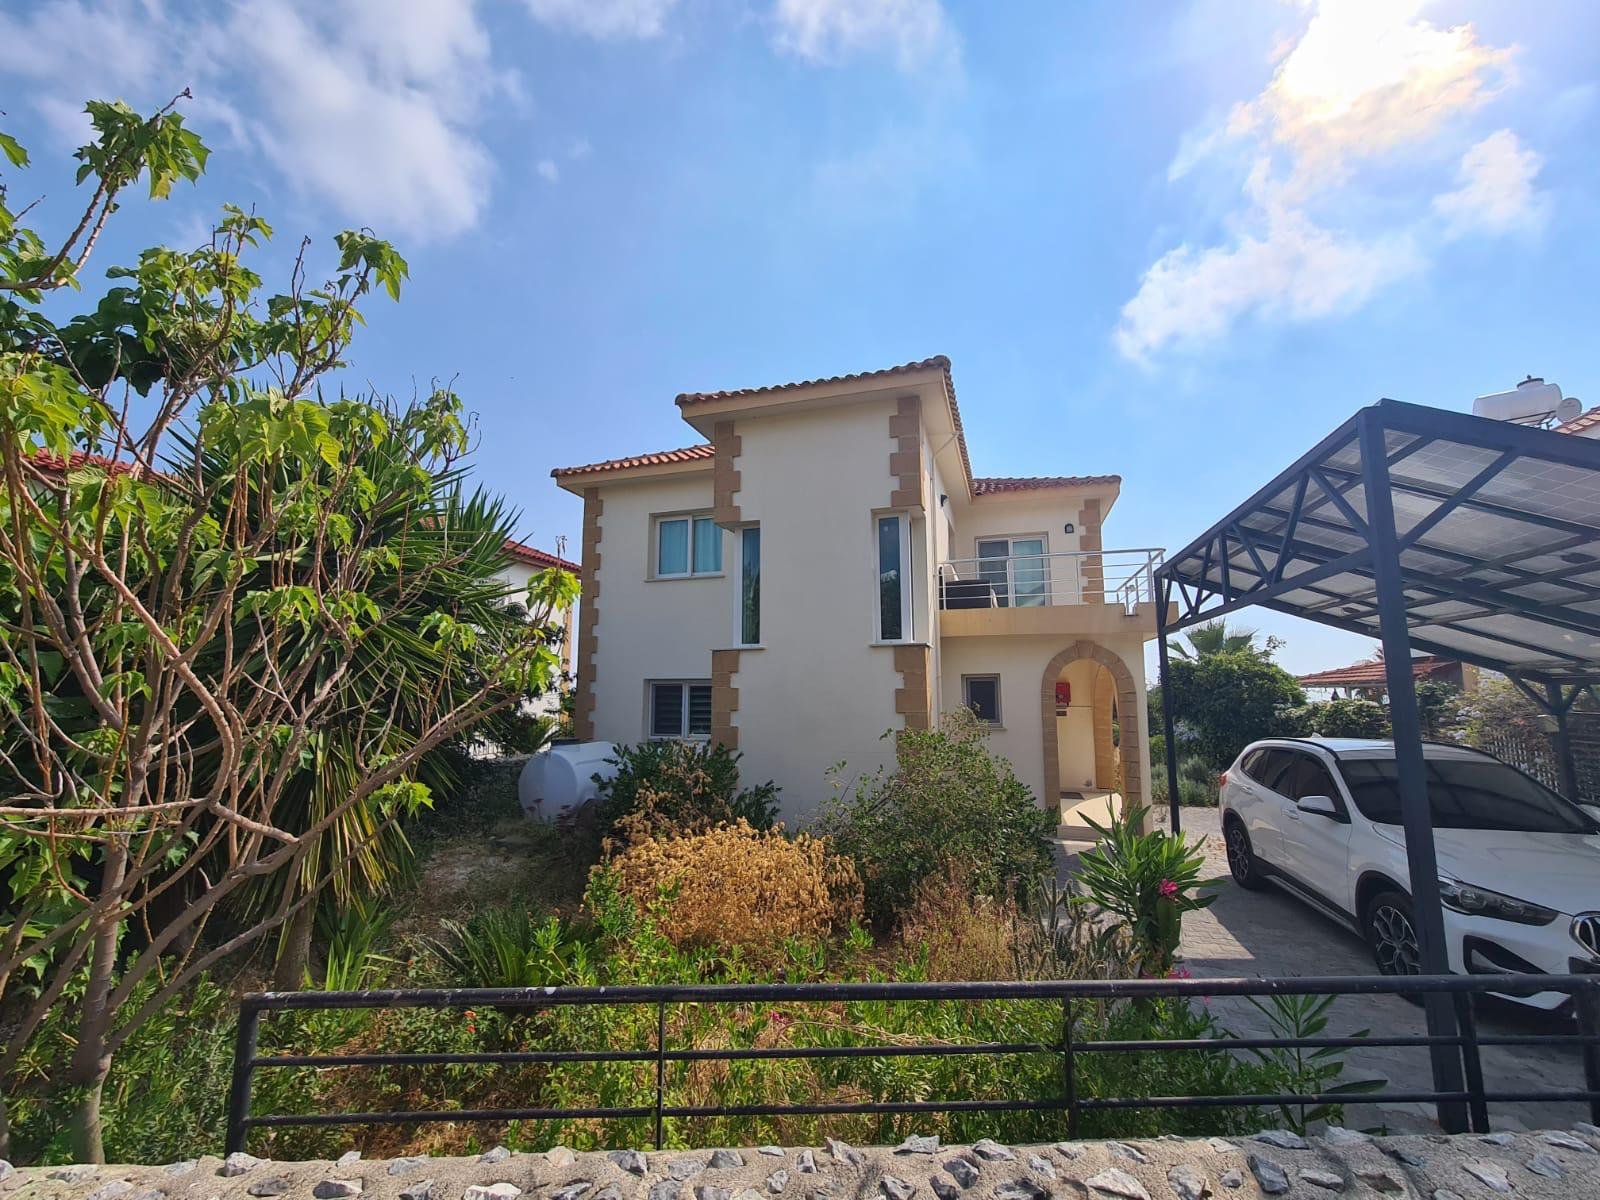 3 bedroom villa for sale in Kyrenia, Karshiyaka-951cbd38-18ef-4d2f-9181-ab5d25d719c6